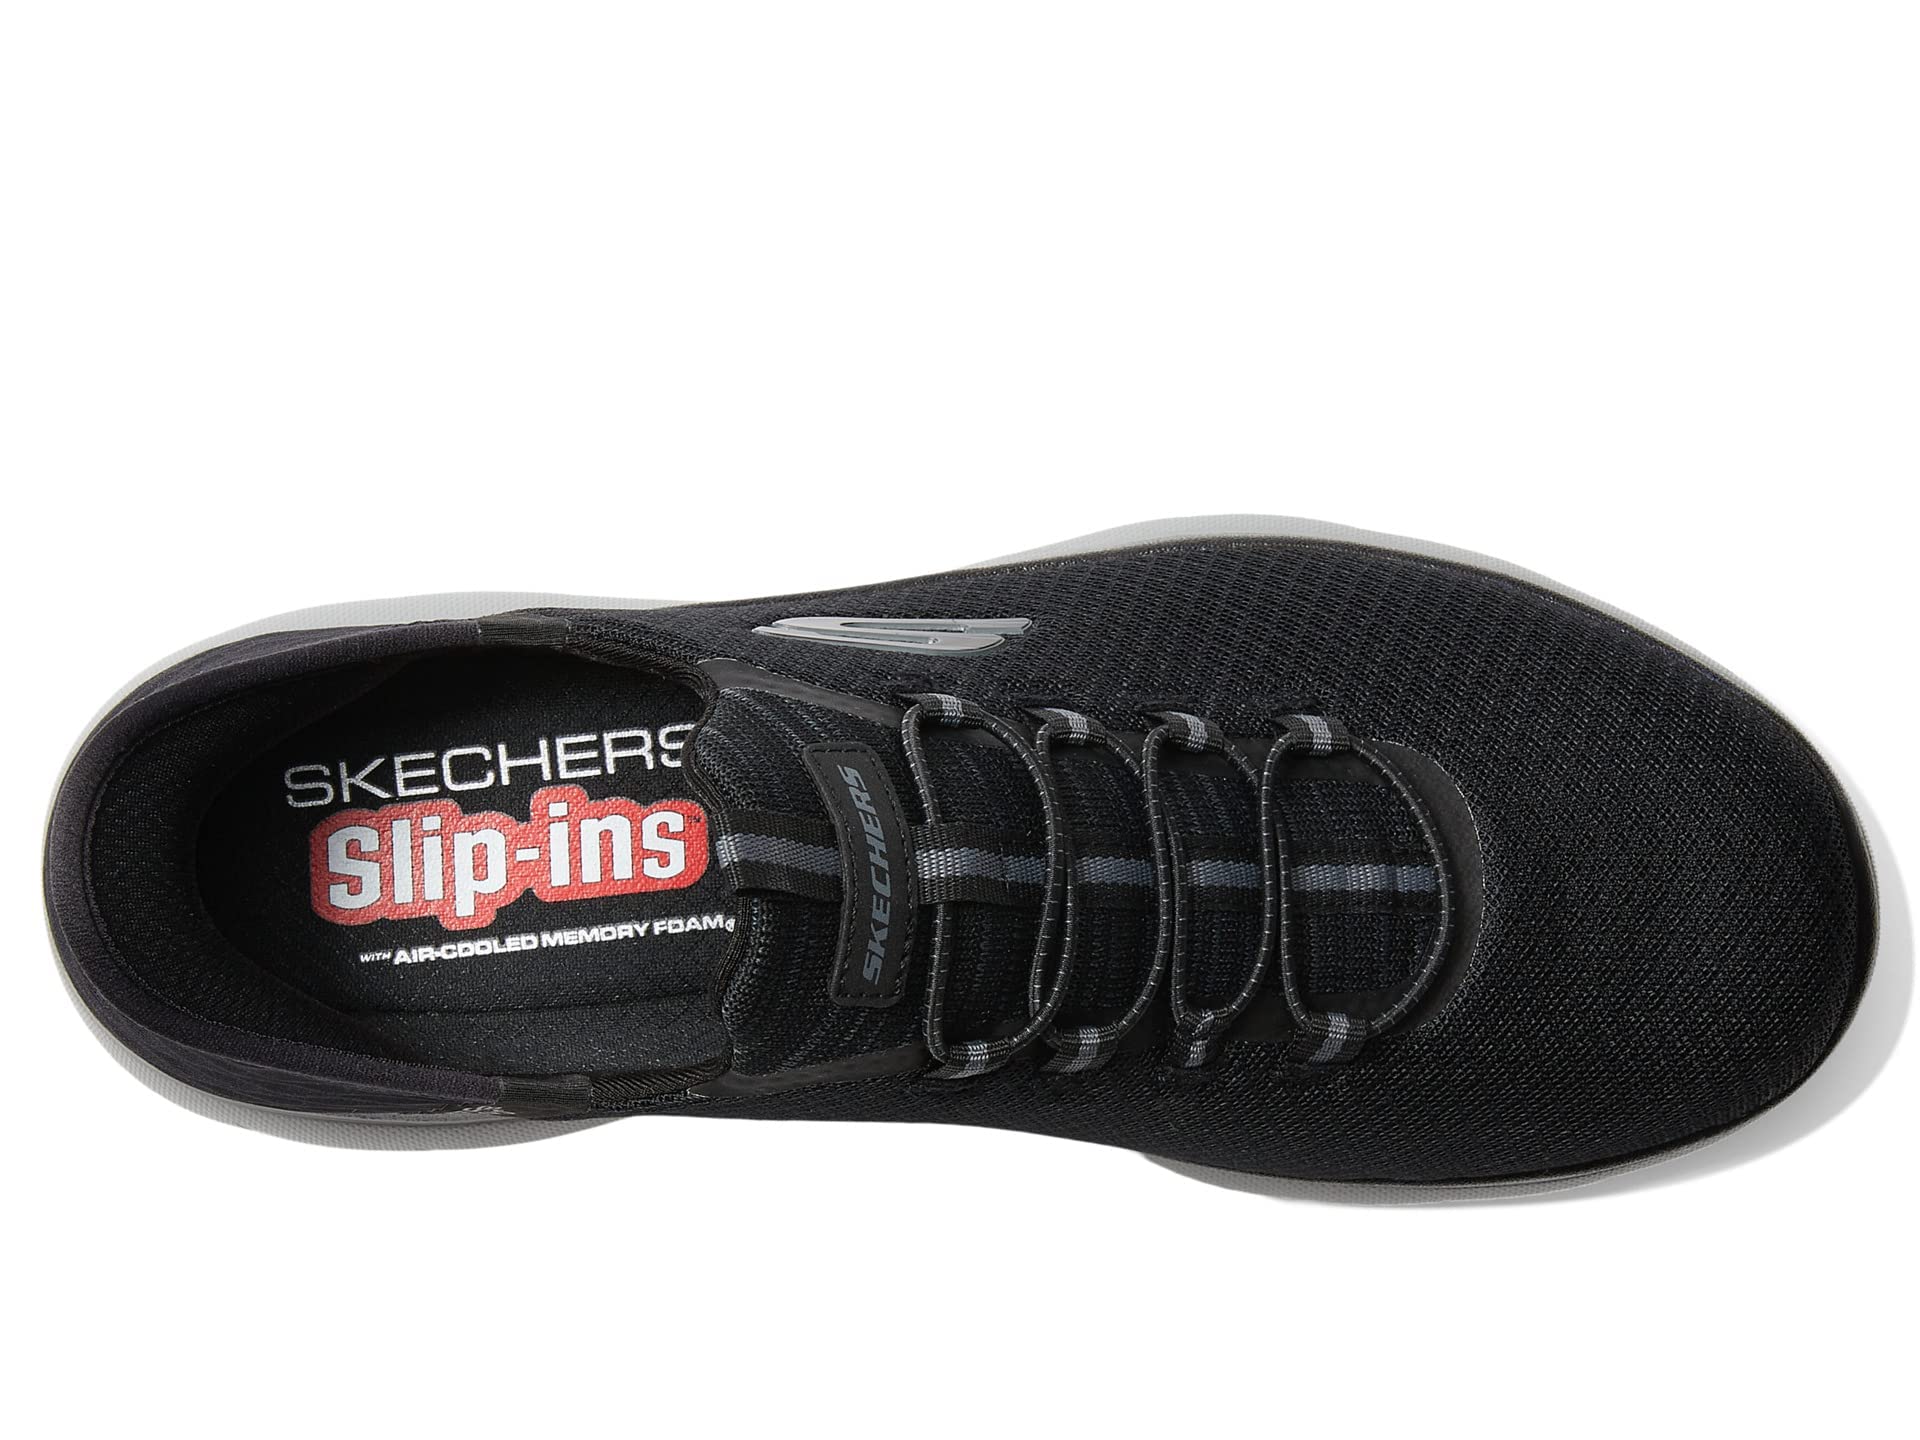 Skechers Men's Summits High Range Hands Free Slip-in Sneaker